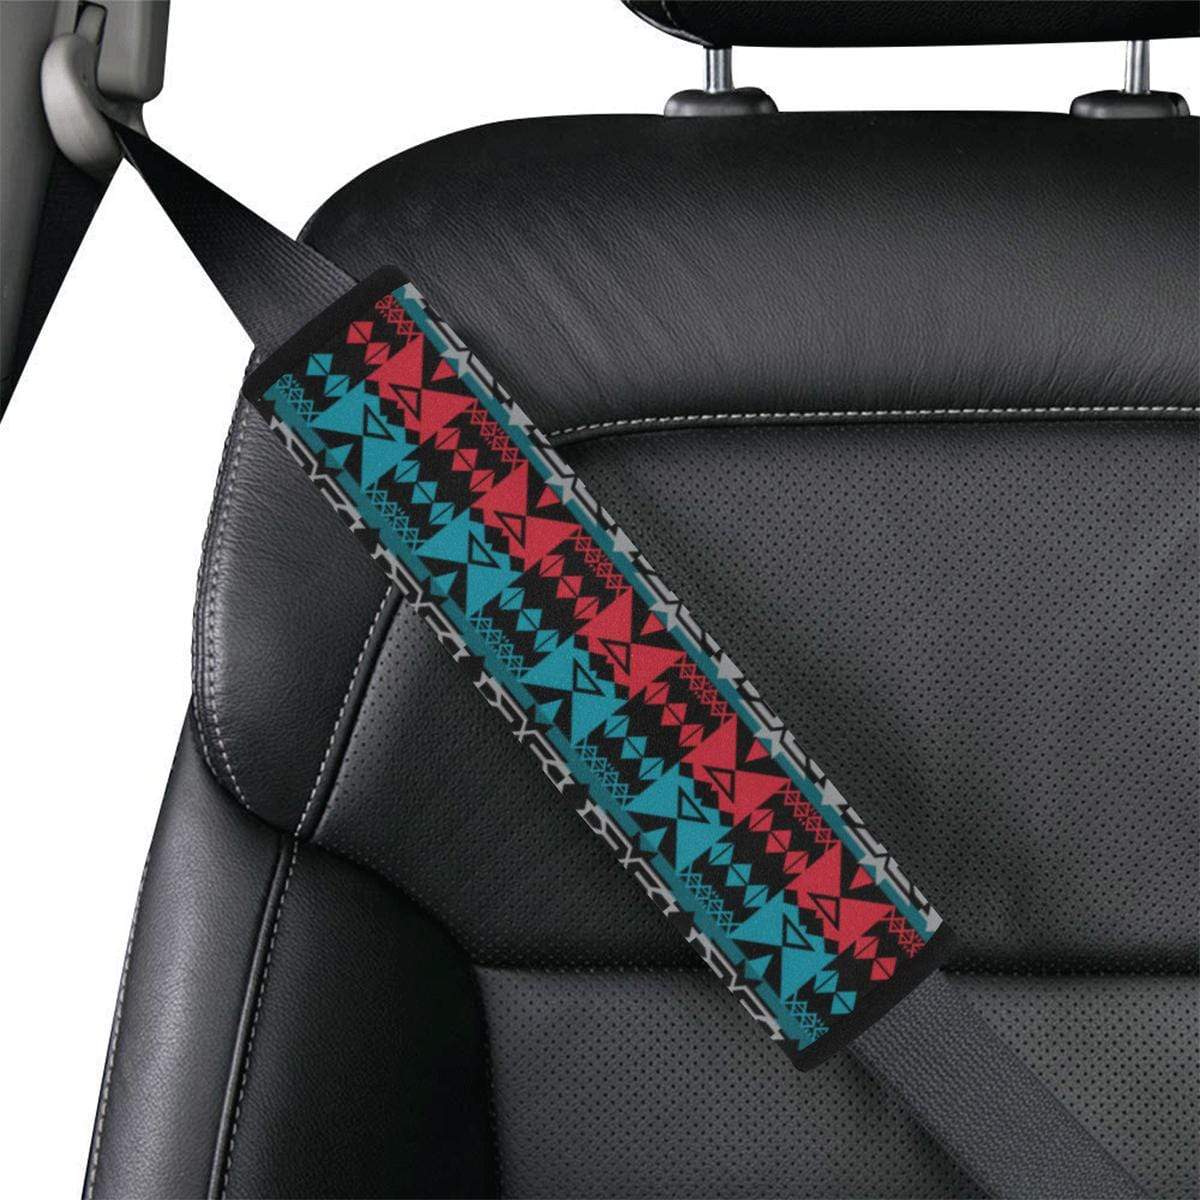 Inside the Lodge Car Seat Belt Cover 7''x12.6'' Car Seat Belt Cover 7''x12.6'' e-joyer 